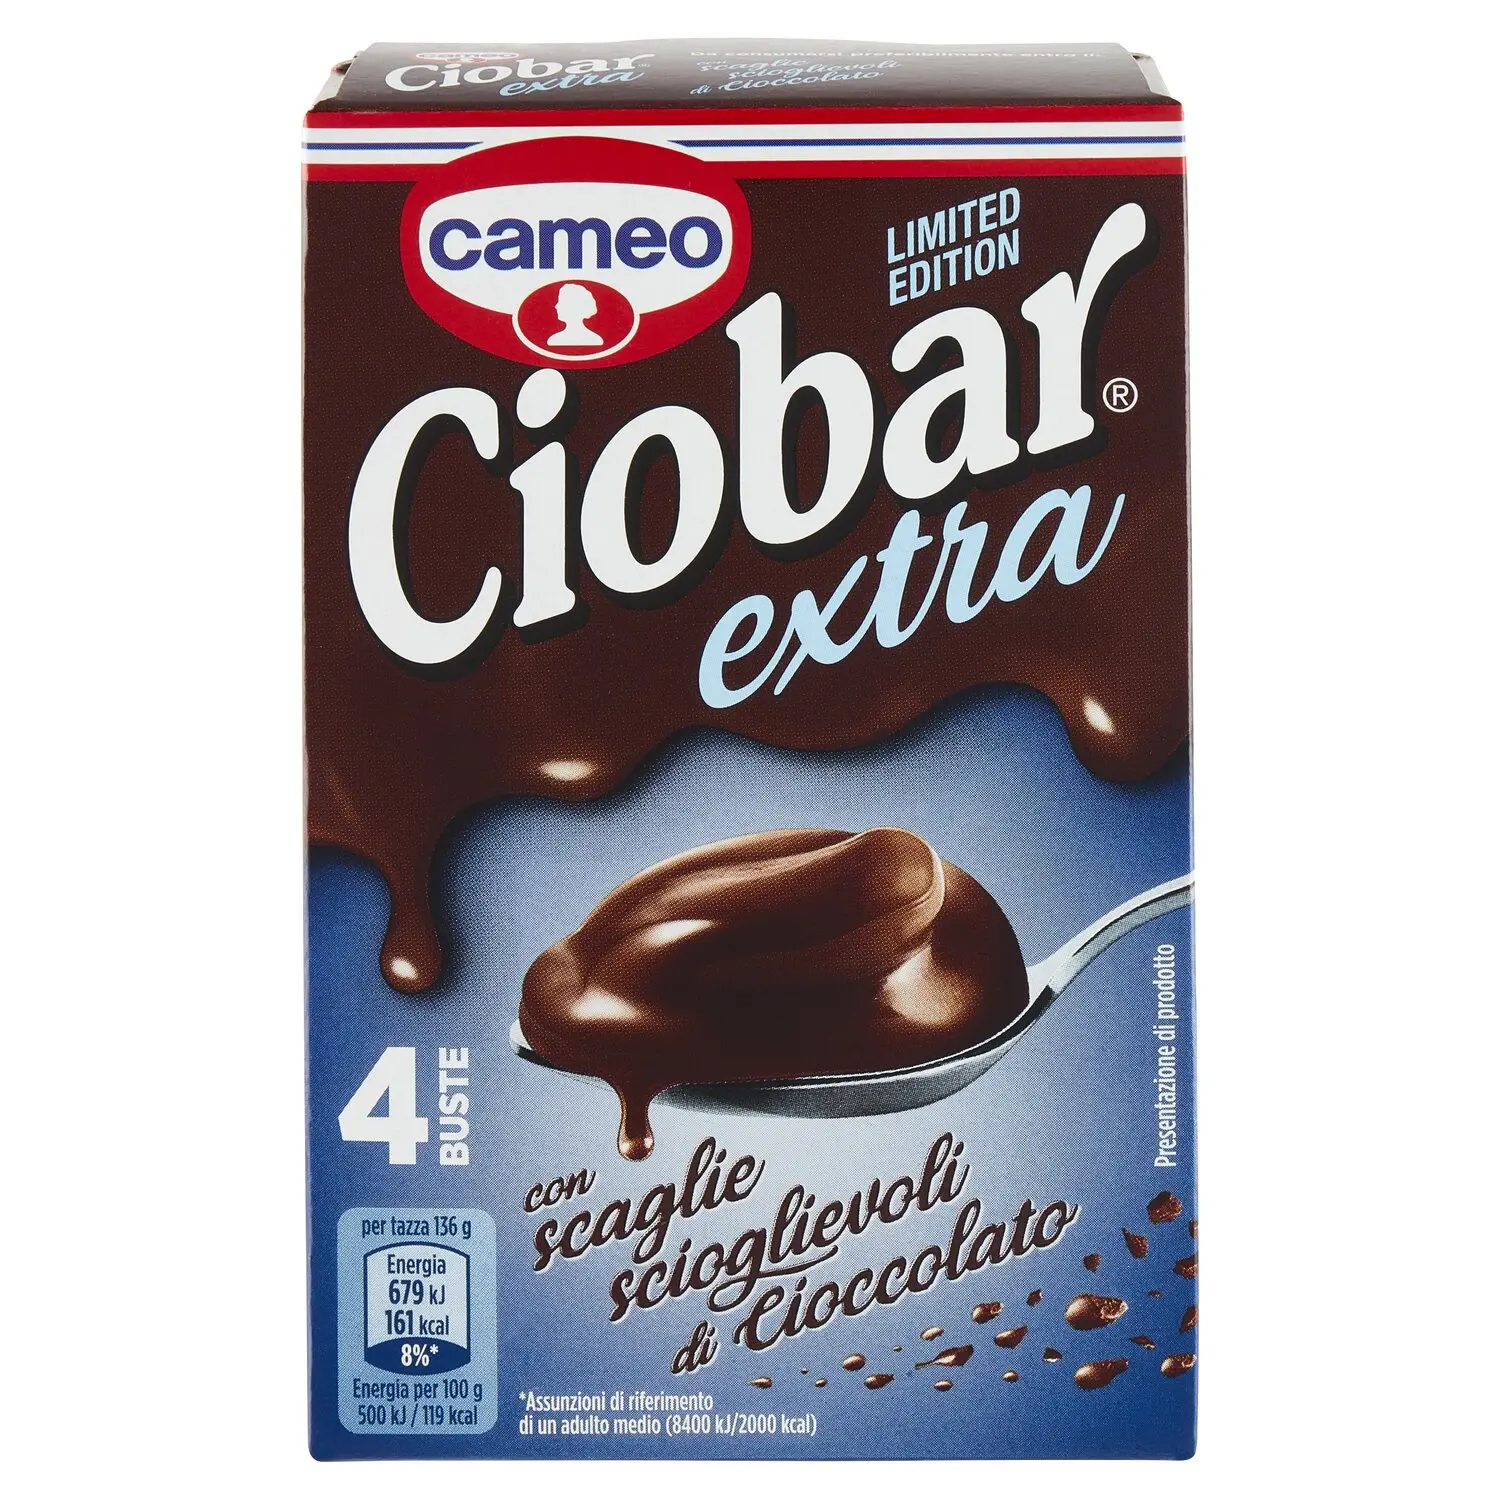 Buy White Hot Chocolate Ciobar Cameo online